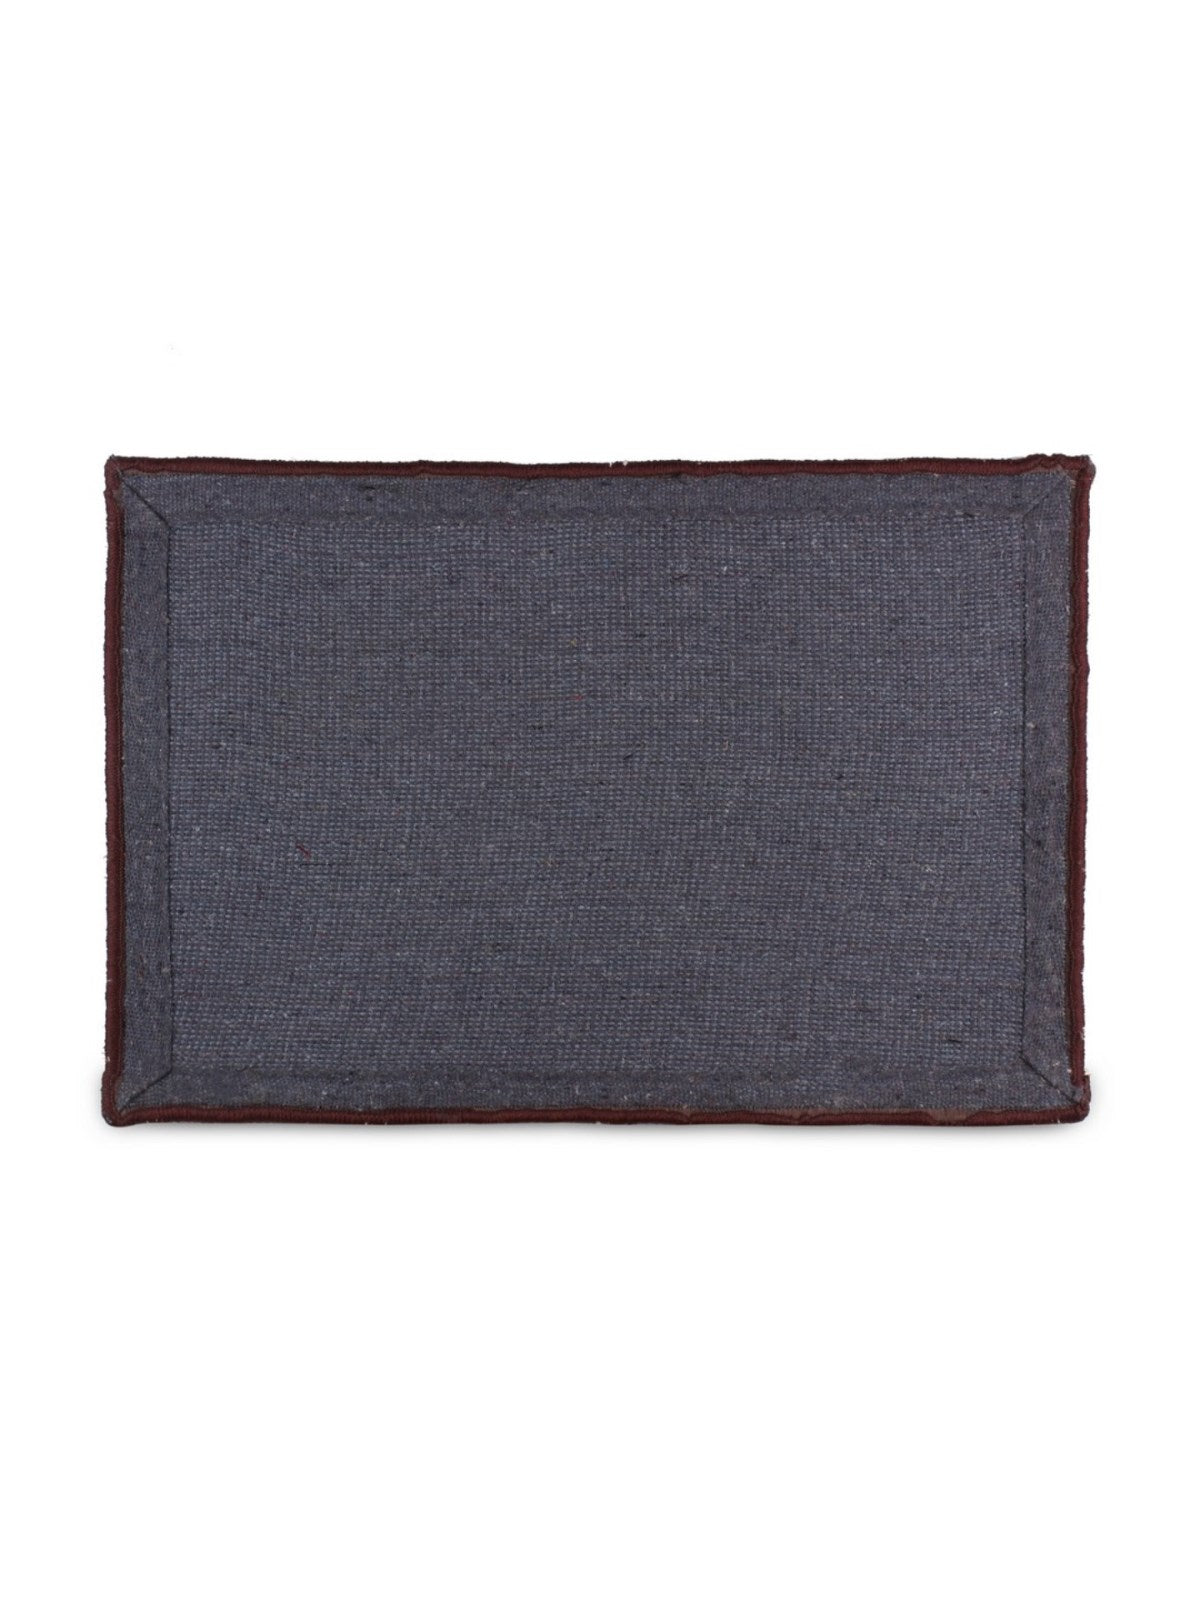 Brown & Beige  Check Polyester Shaggy Anti-Skid Doormat